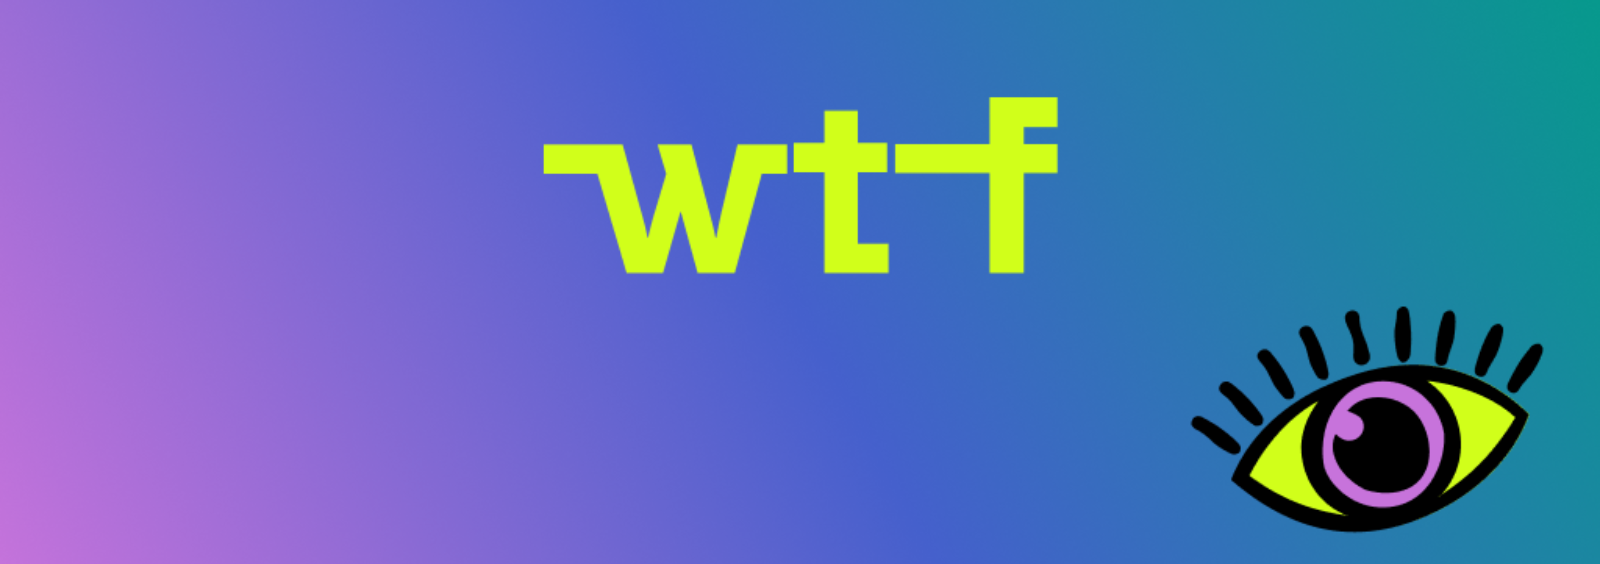 WTF logo